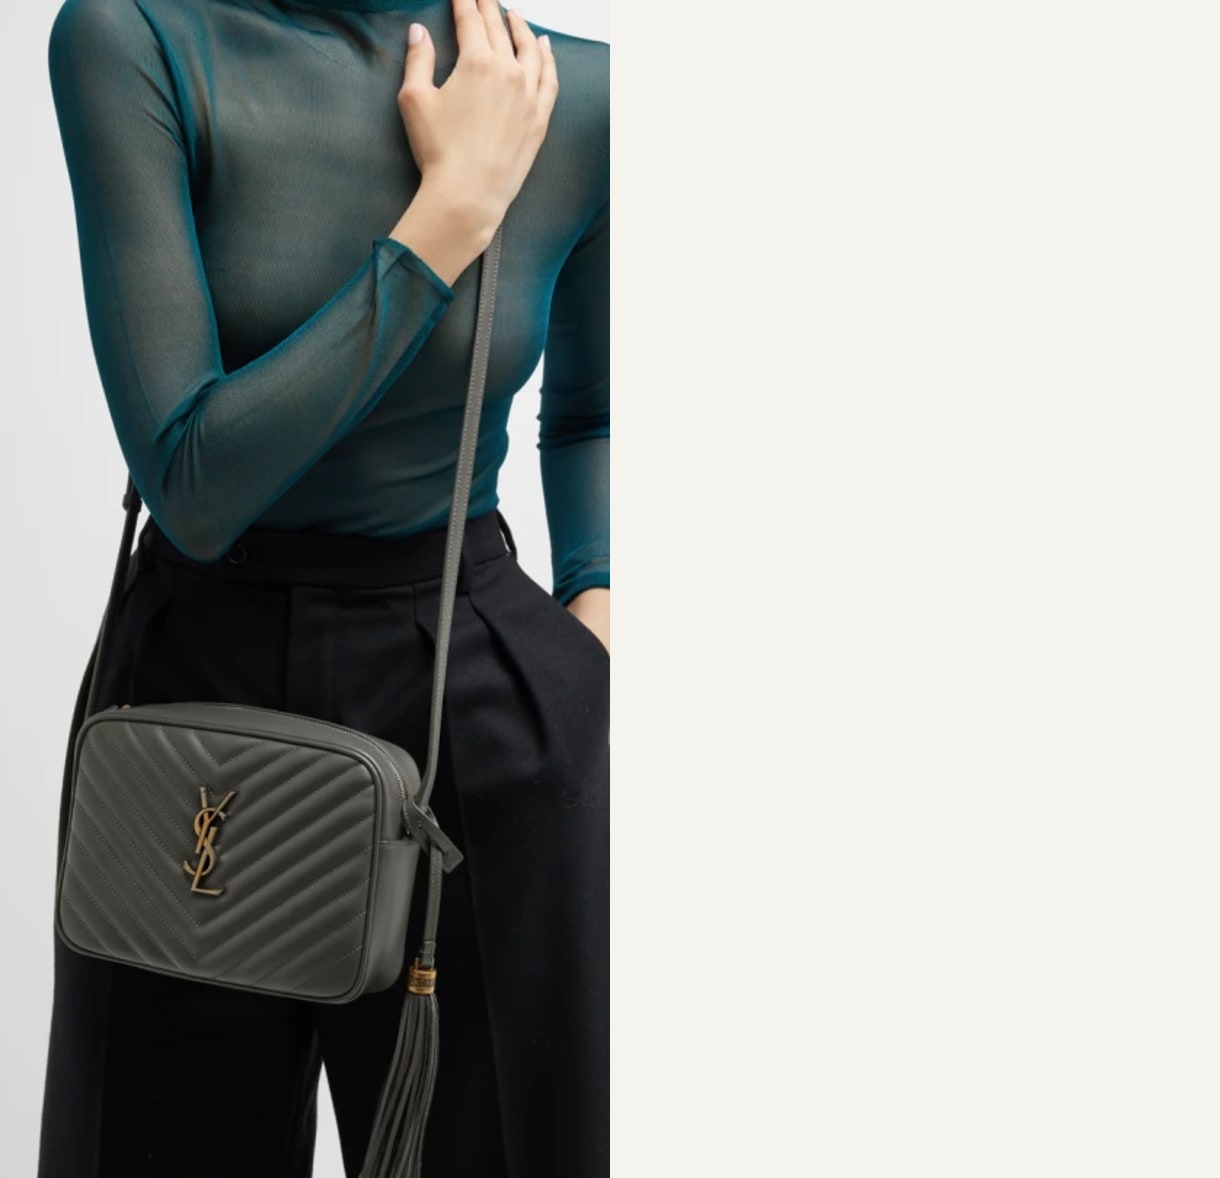 Brera Studded Leather Satchel Bag, Black by VBH at Neiman Marcus.  #MillionDollarShoppersDanielle